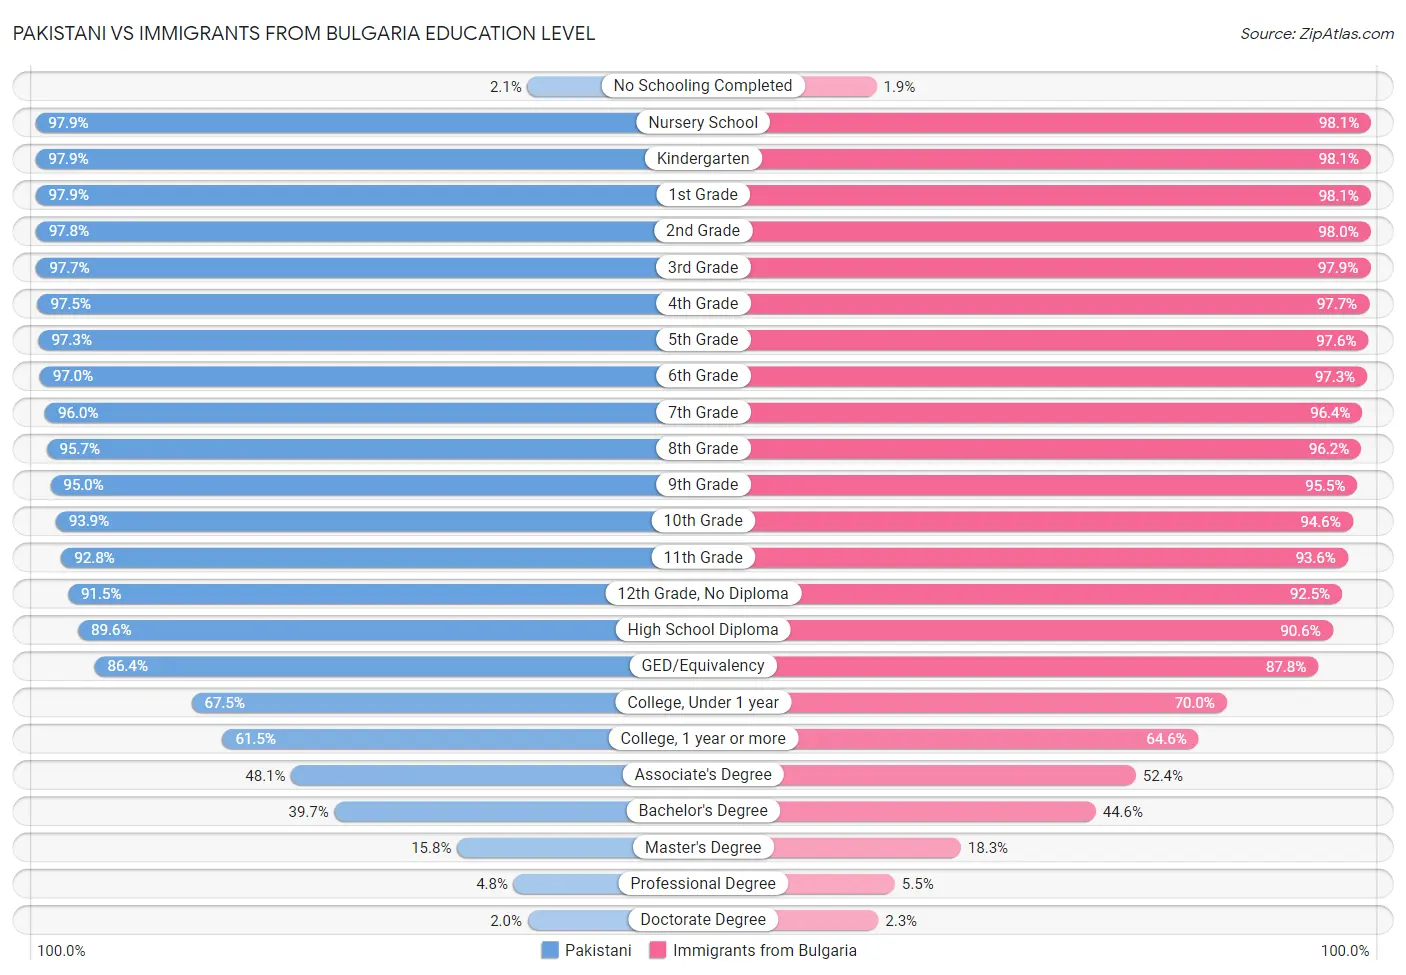 Pakistani vs Immigrants from Bulgaria Education Level